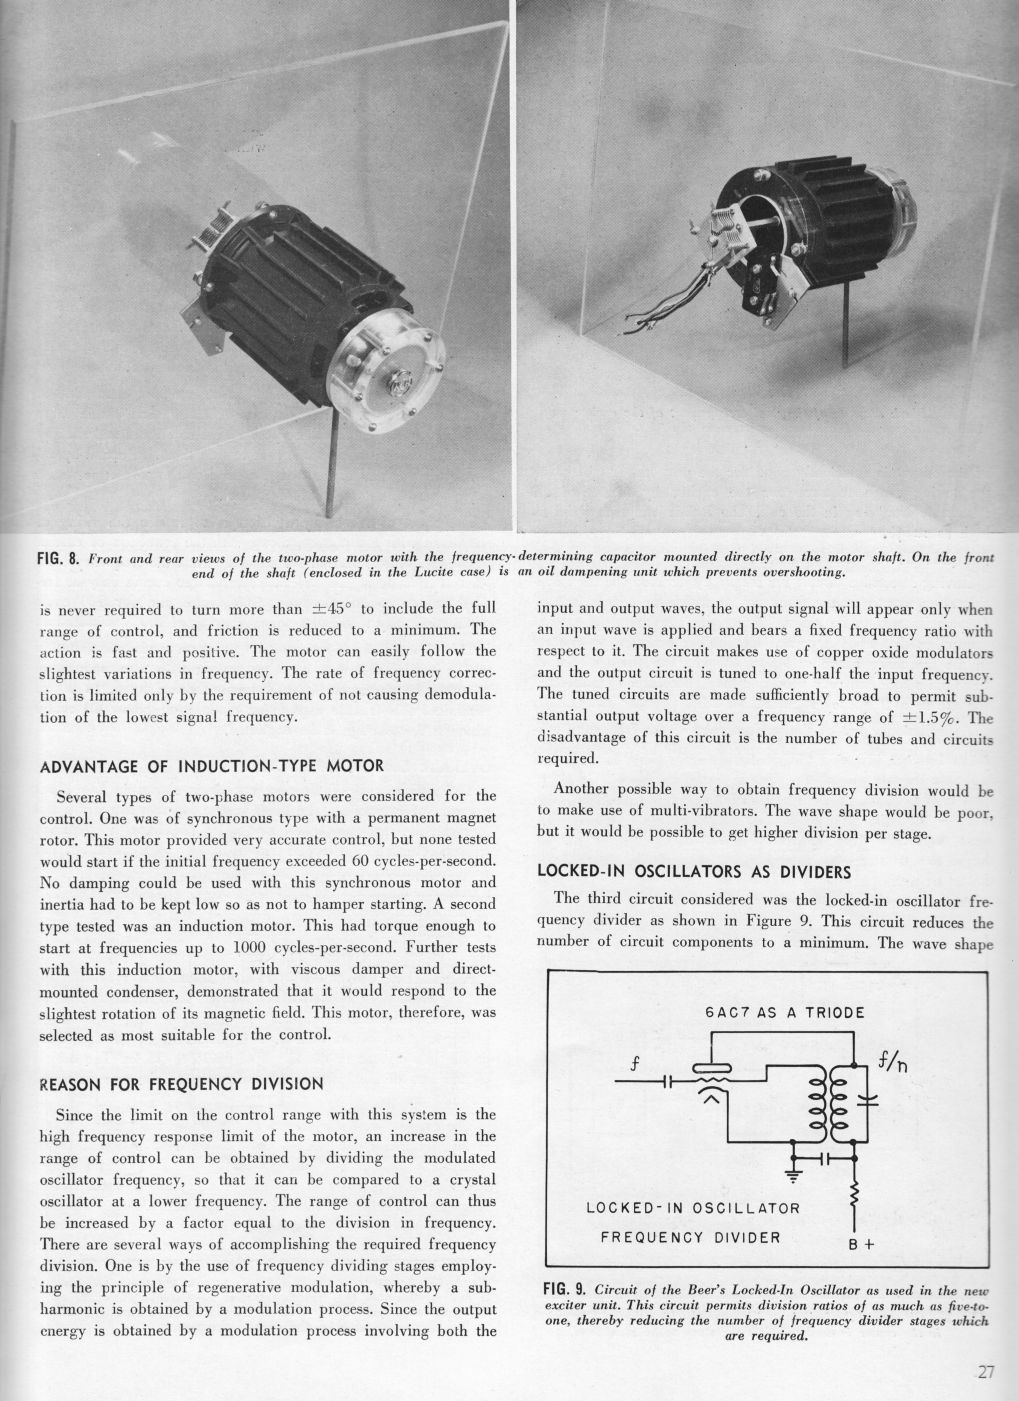 RCA MI-7015 Direct FM Exciter, page 4